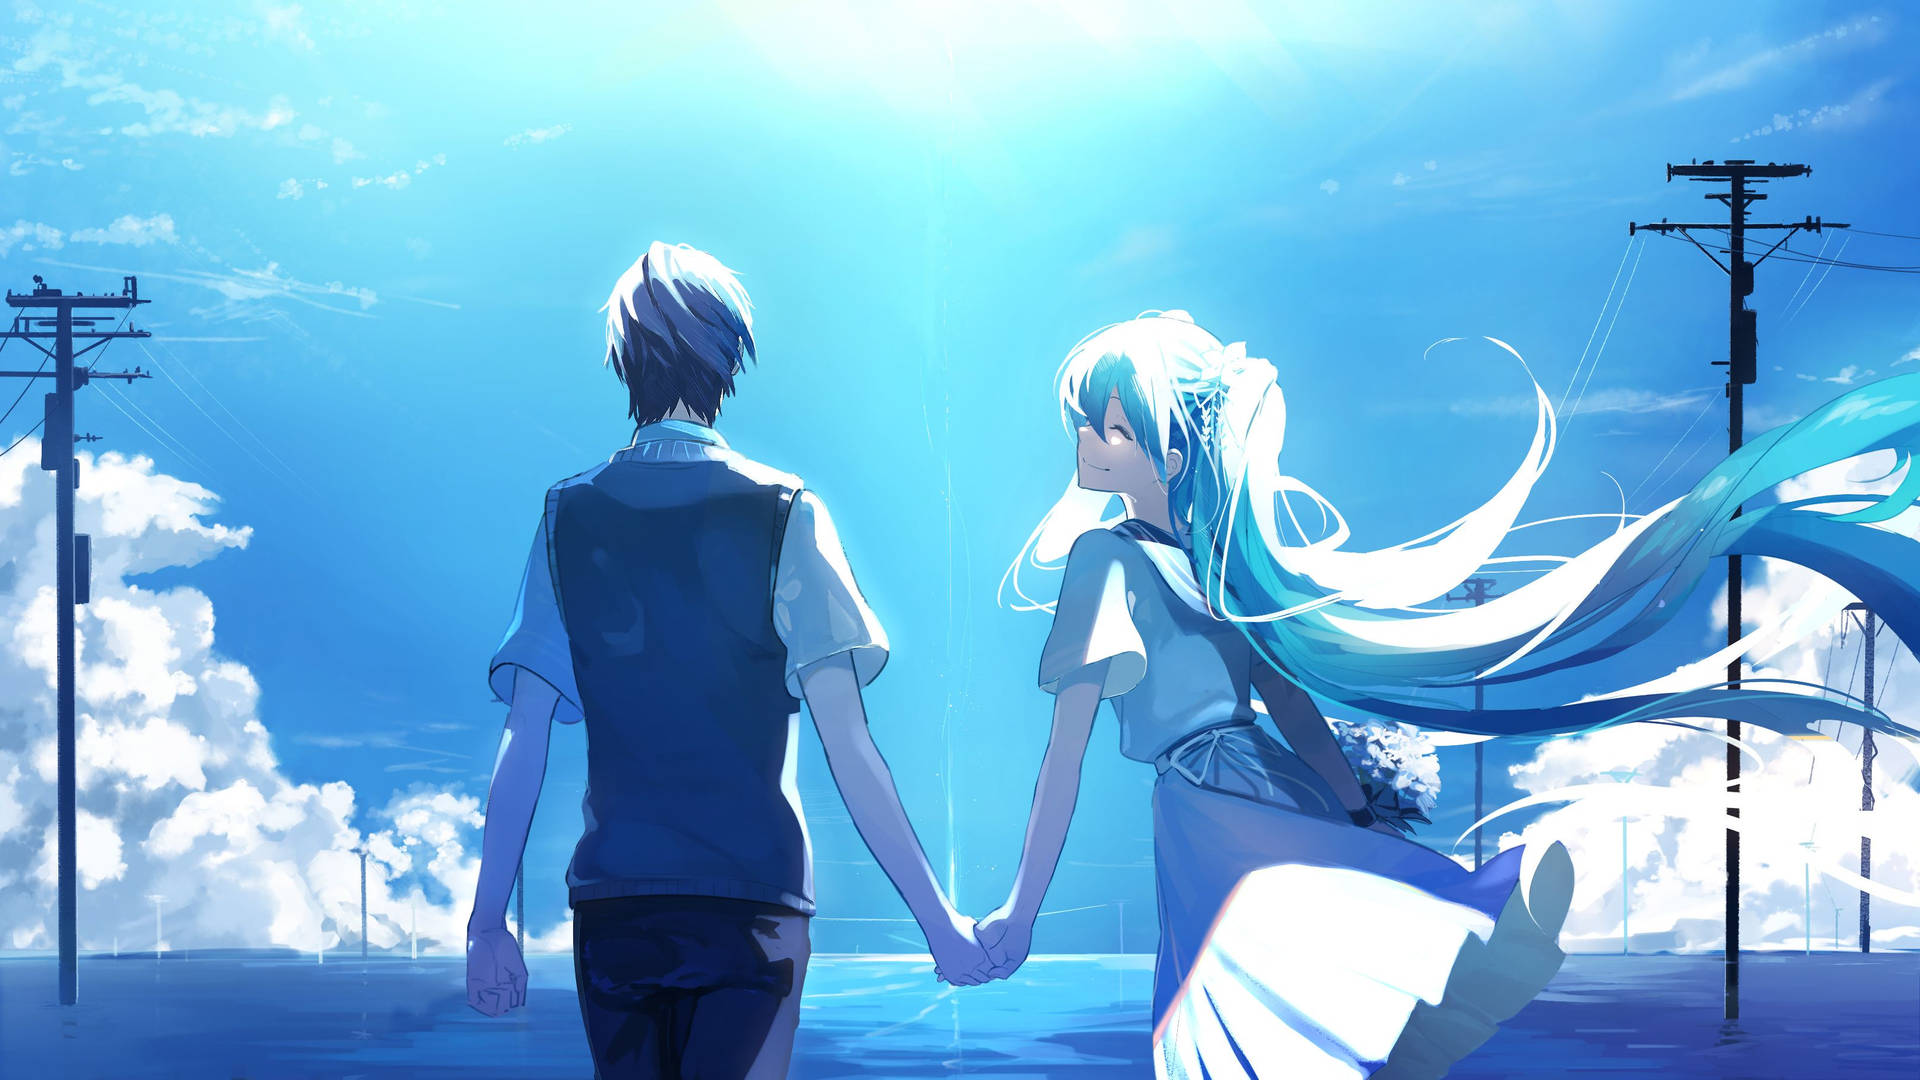 Anime Love Couple Holding Hands Wallpaper